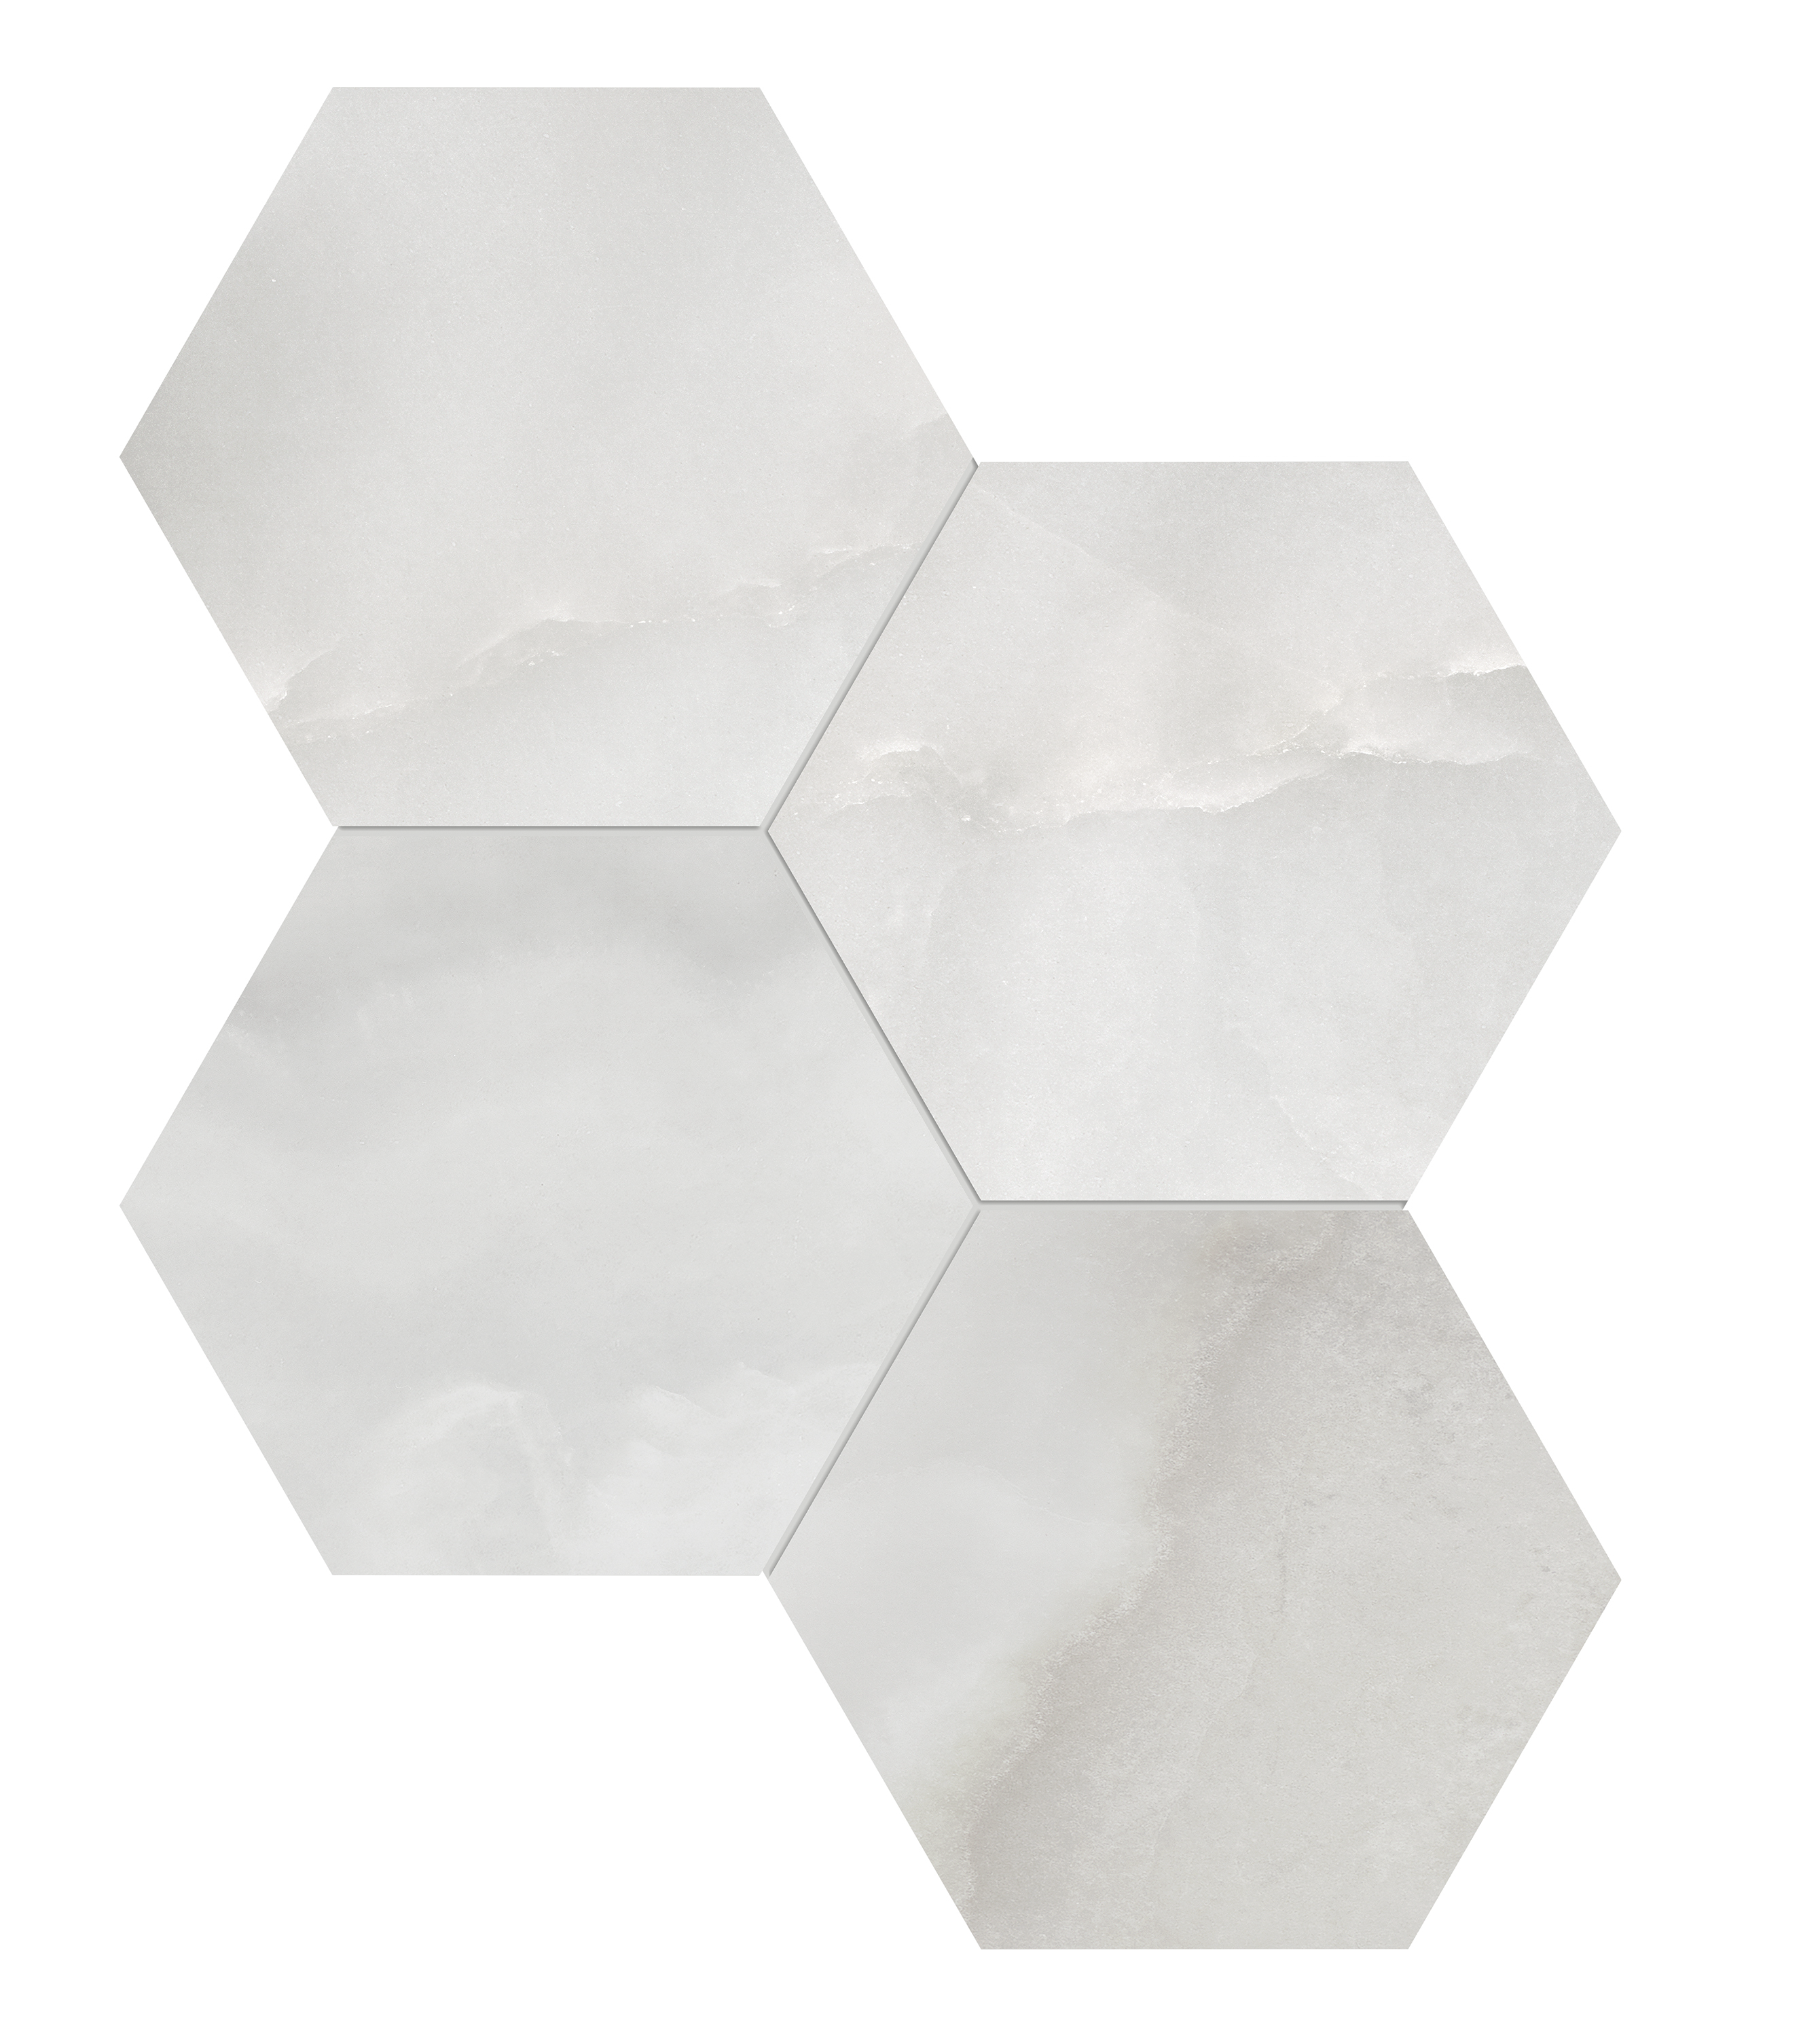 onyx nuvolato hexagon 6-inch pattern glazed porcelain mosaic from la marca anatolia collection distributed by surface group international polished finish straight edge edge mesh shape